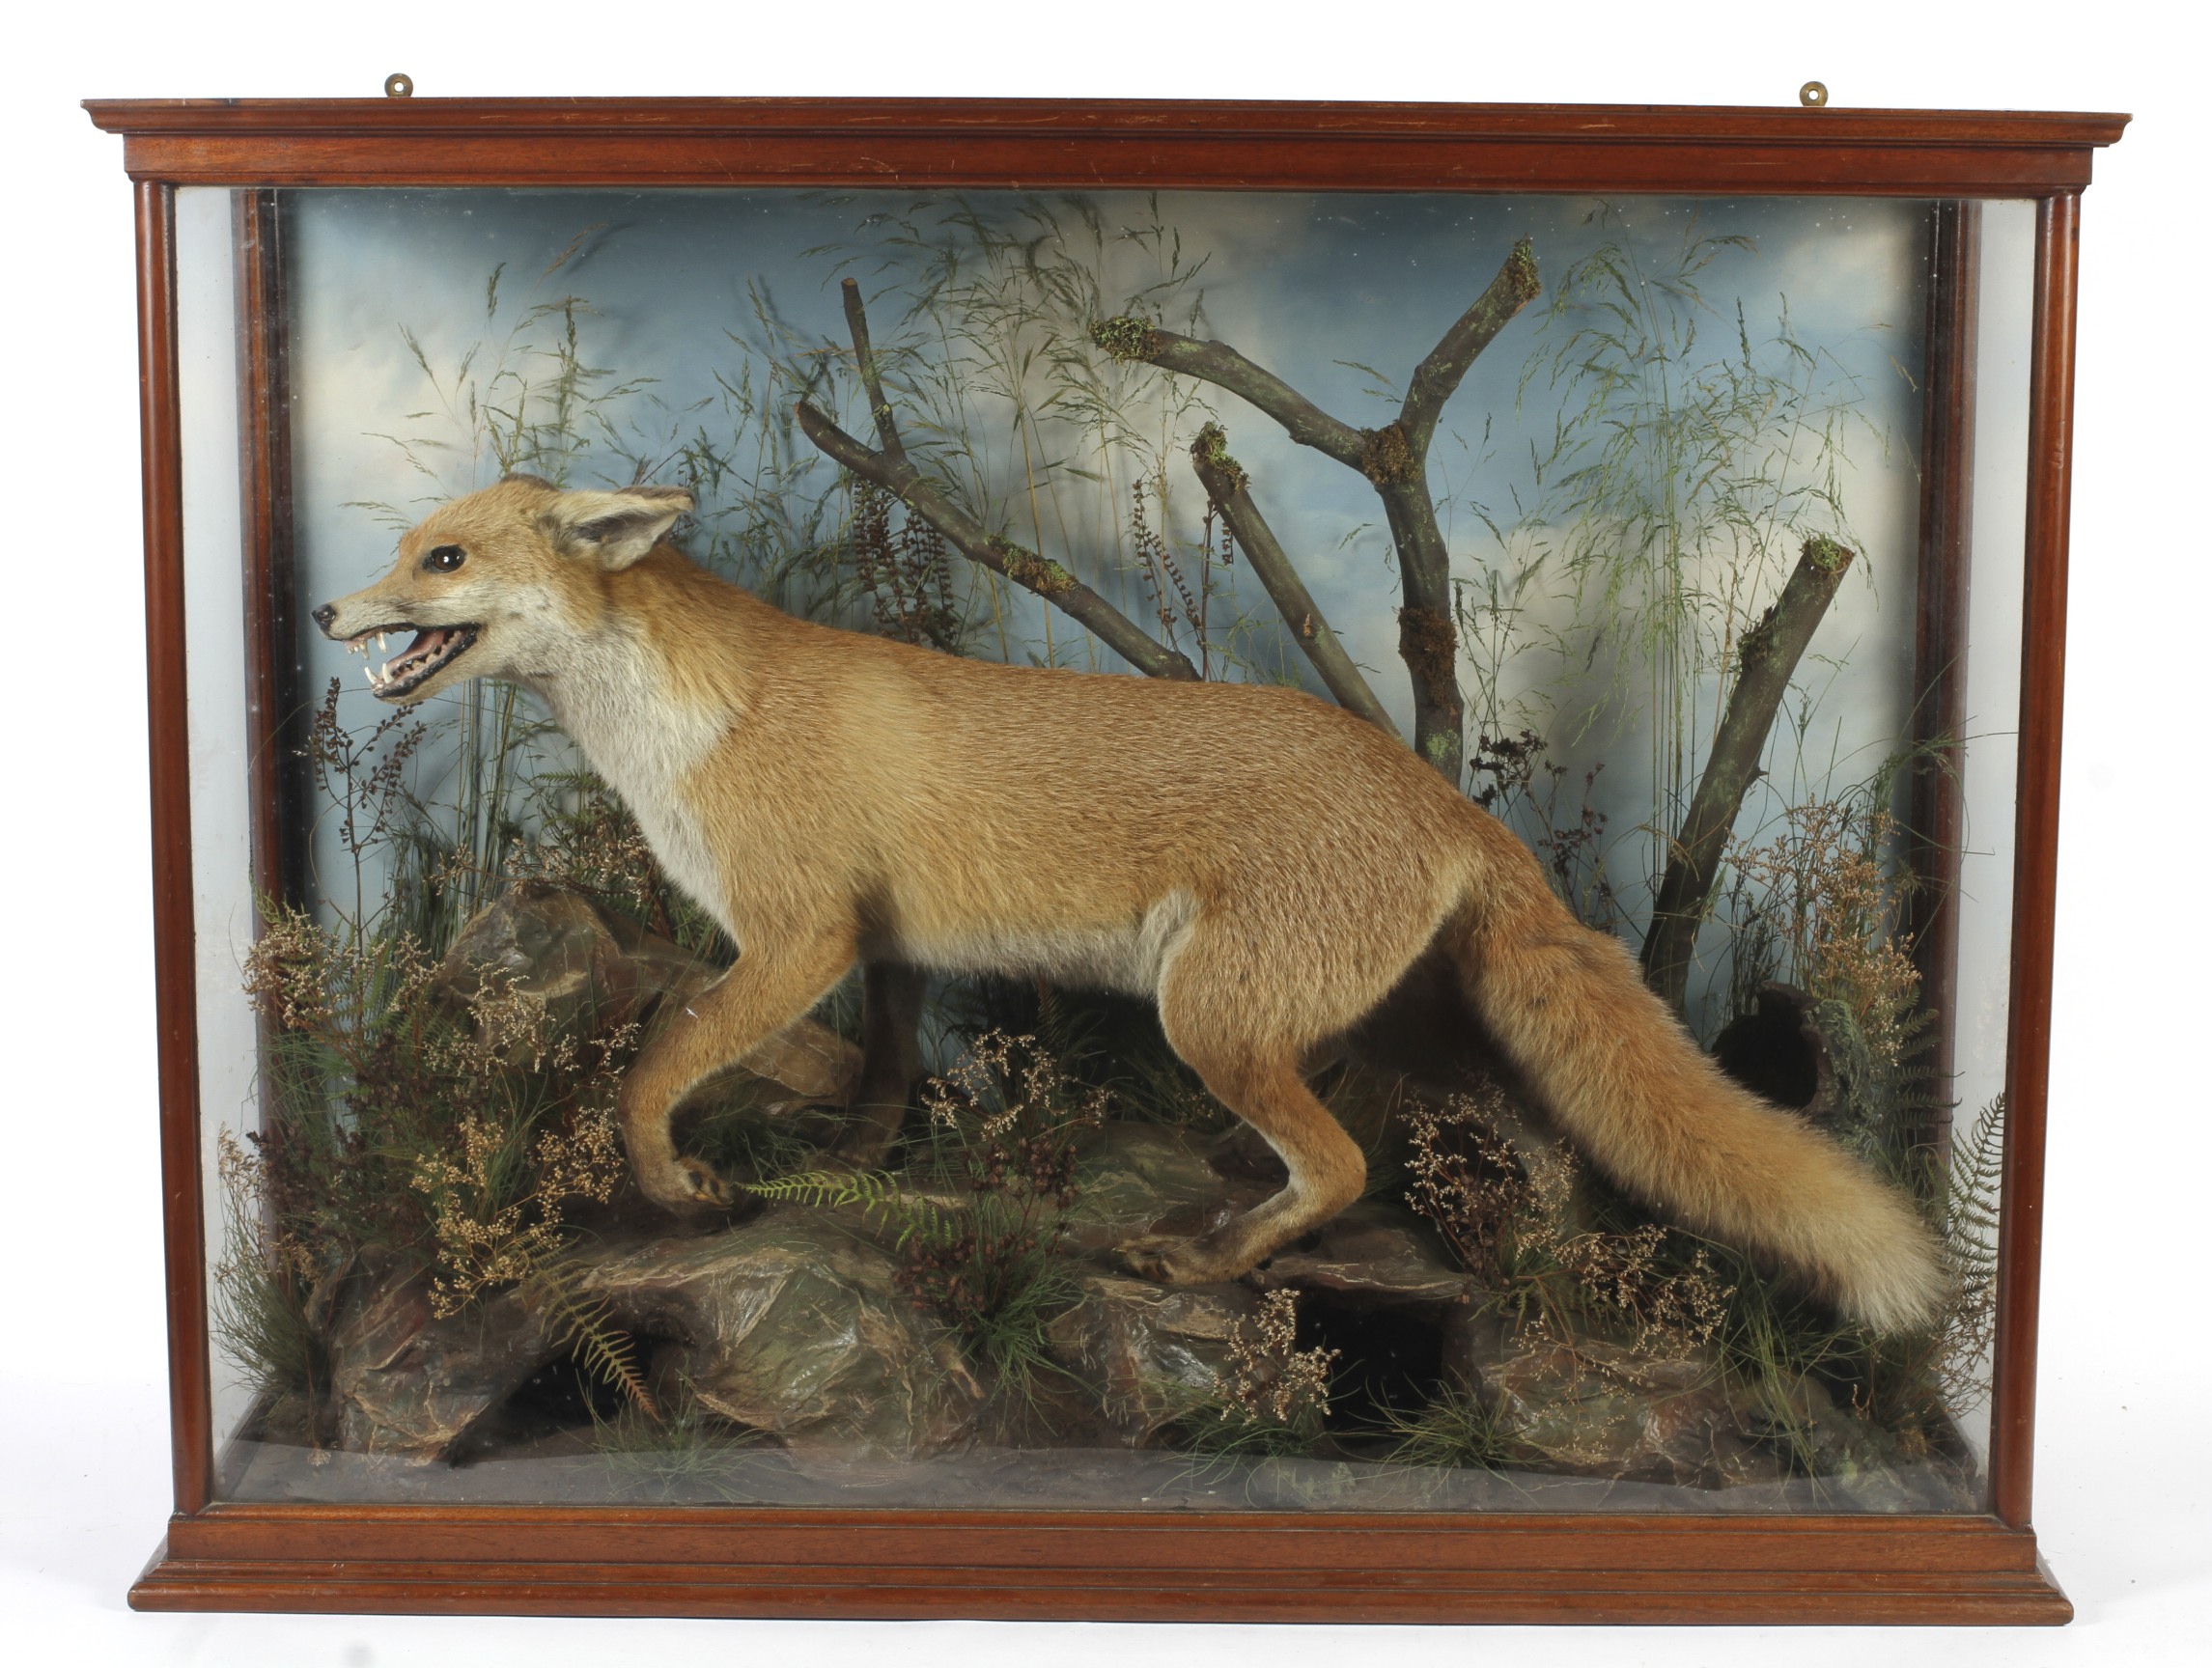 A taxidermy fox in a glass case.